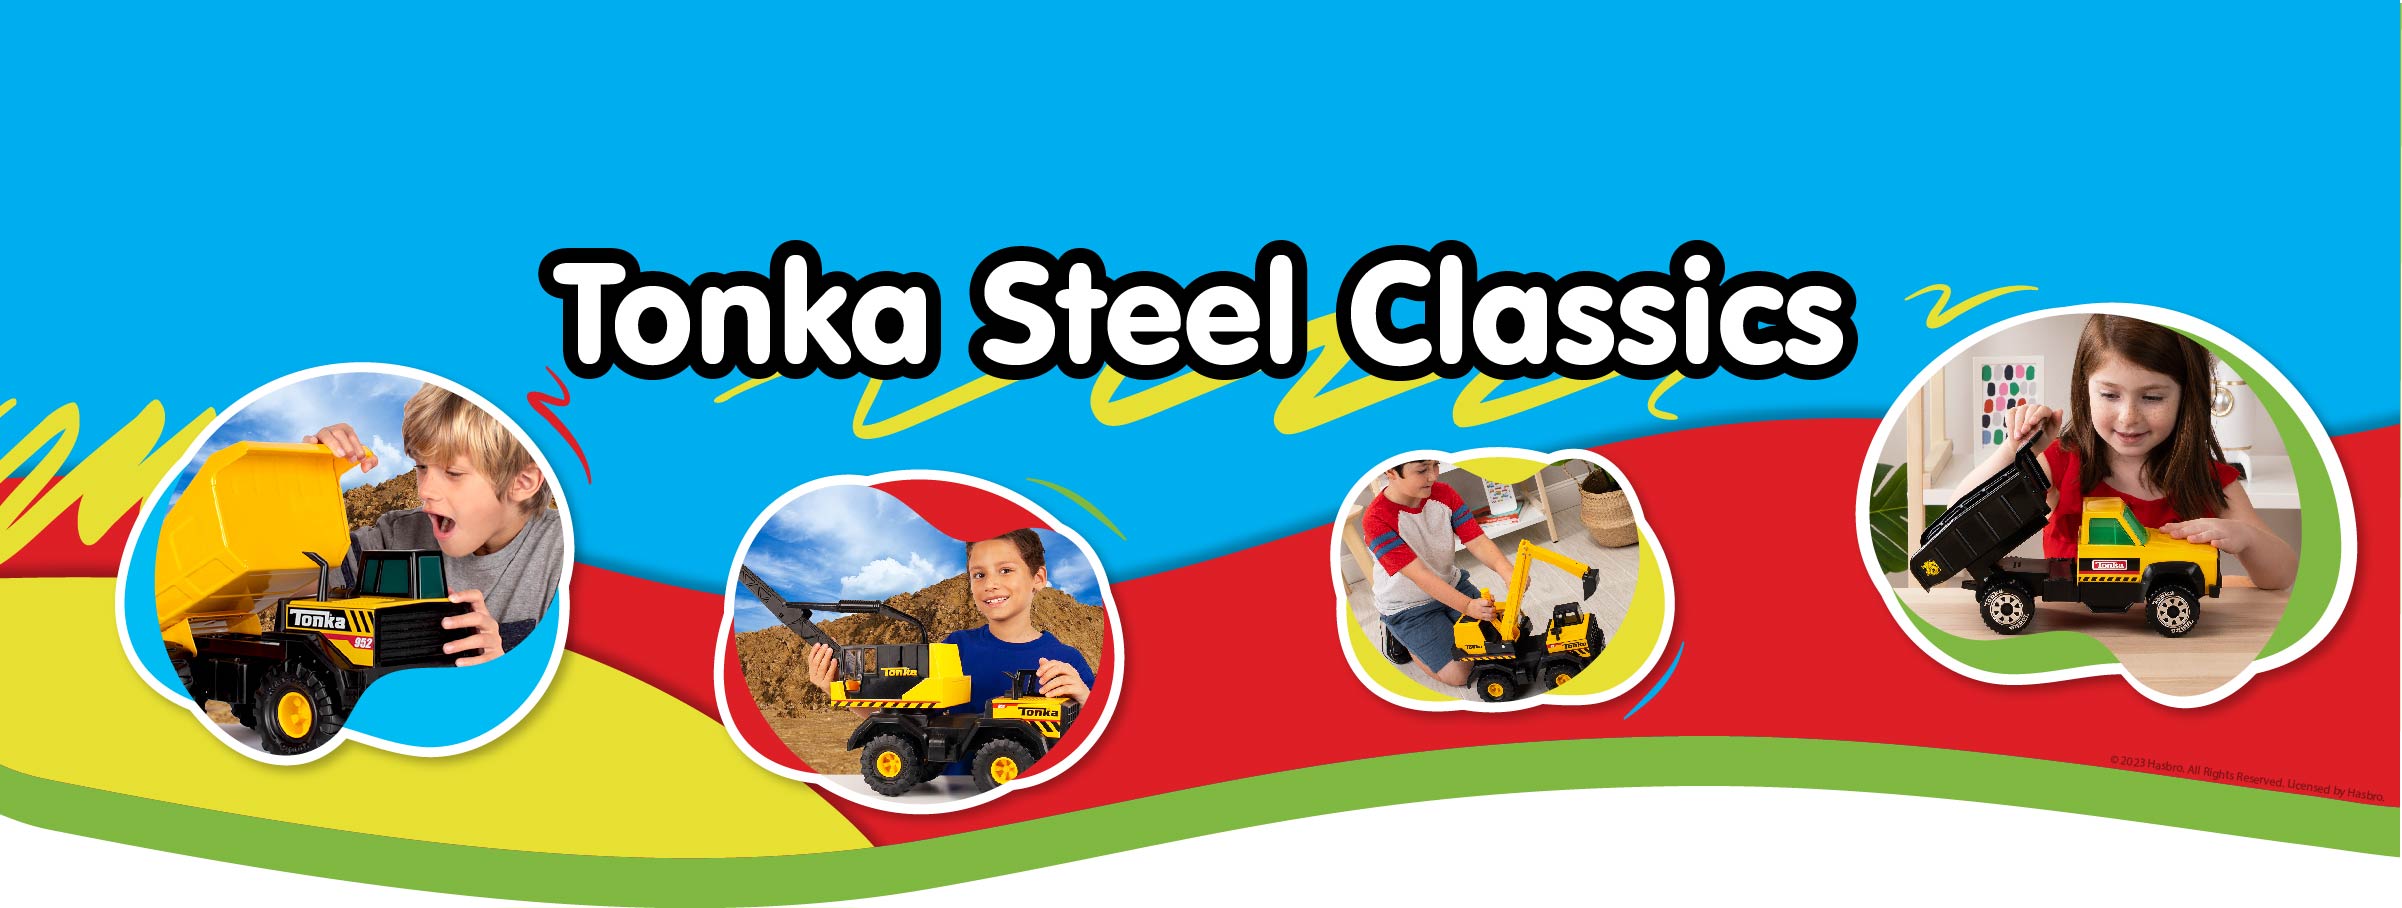 Tonka Steel Classics